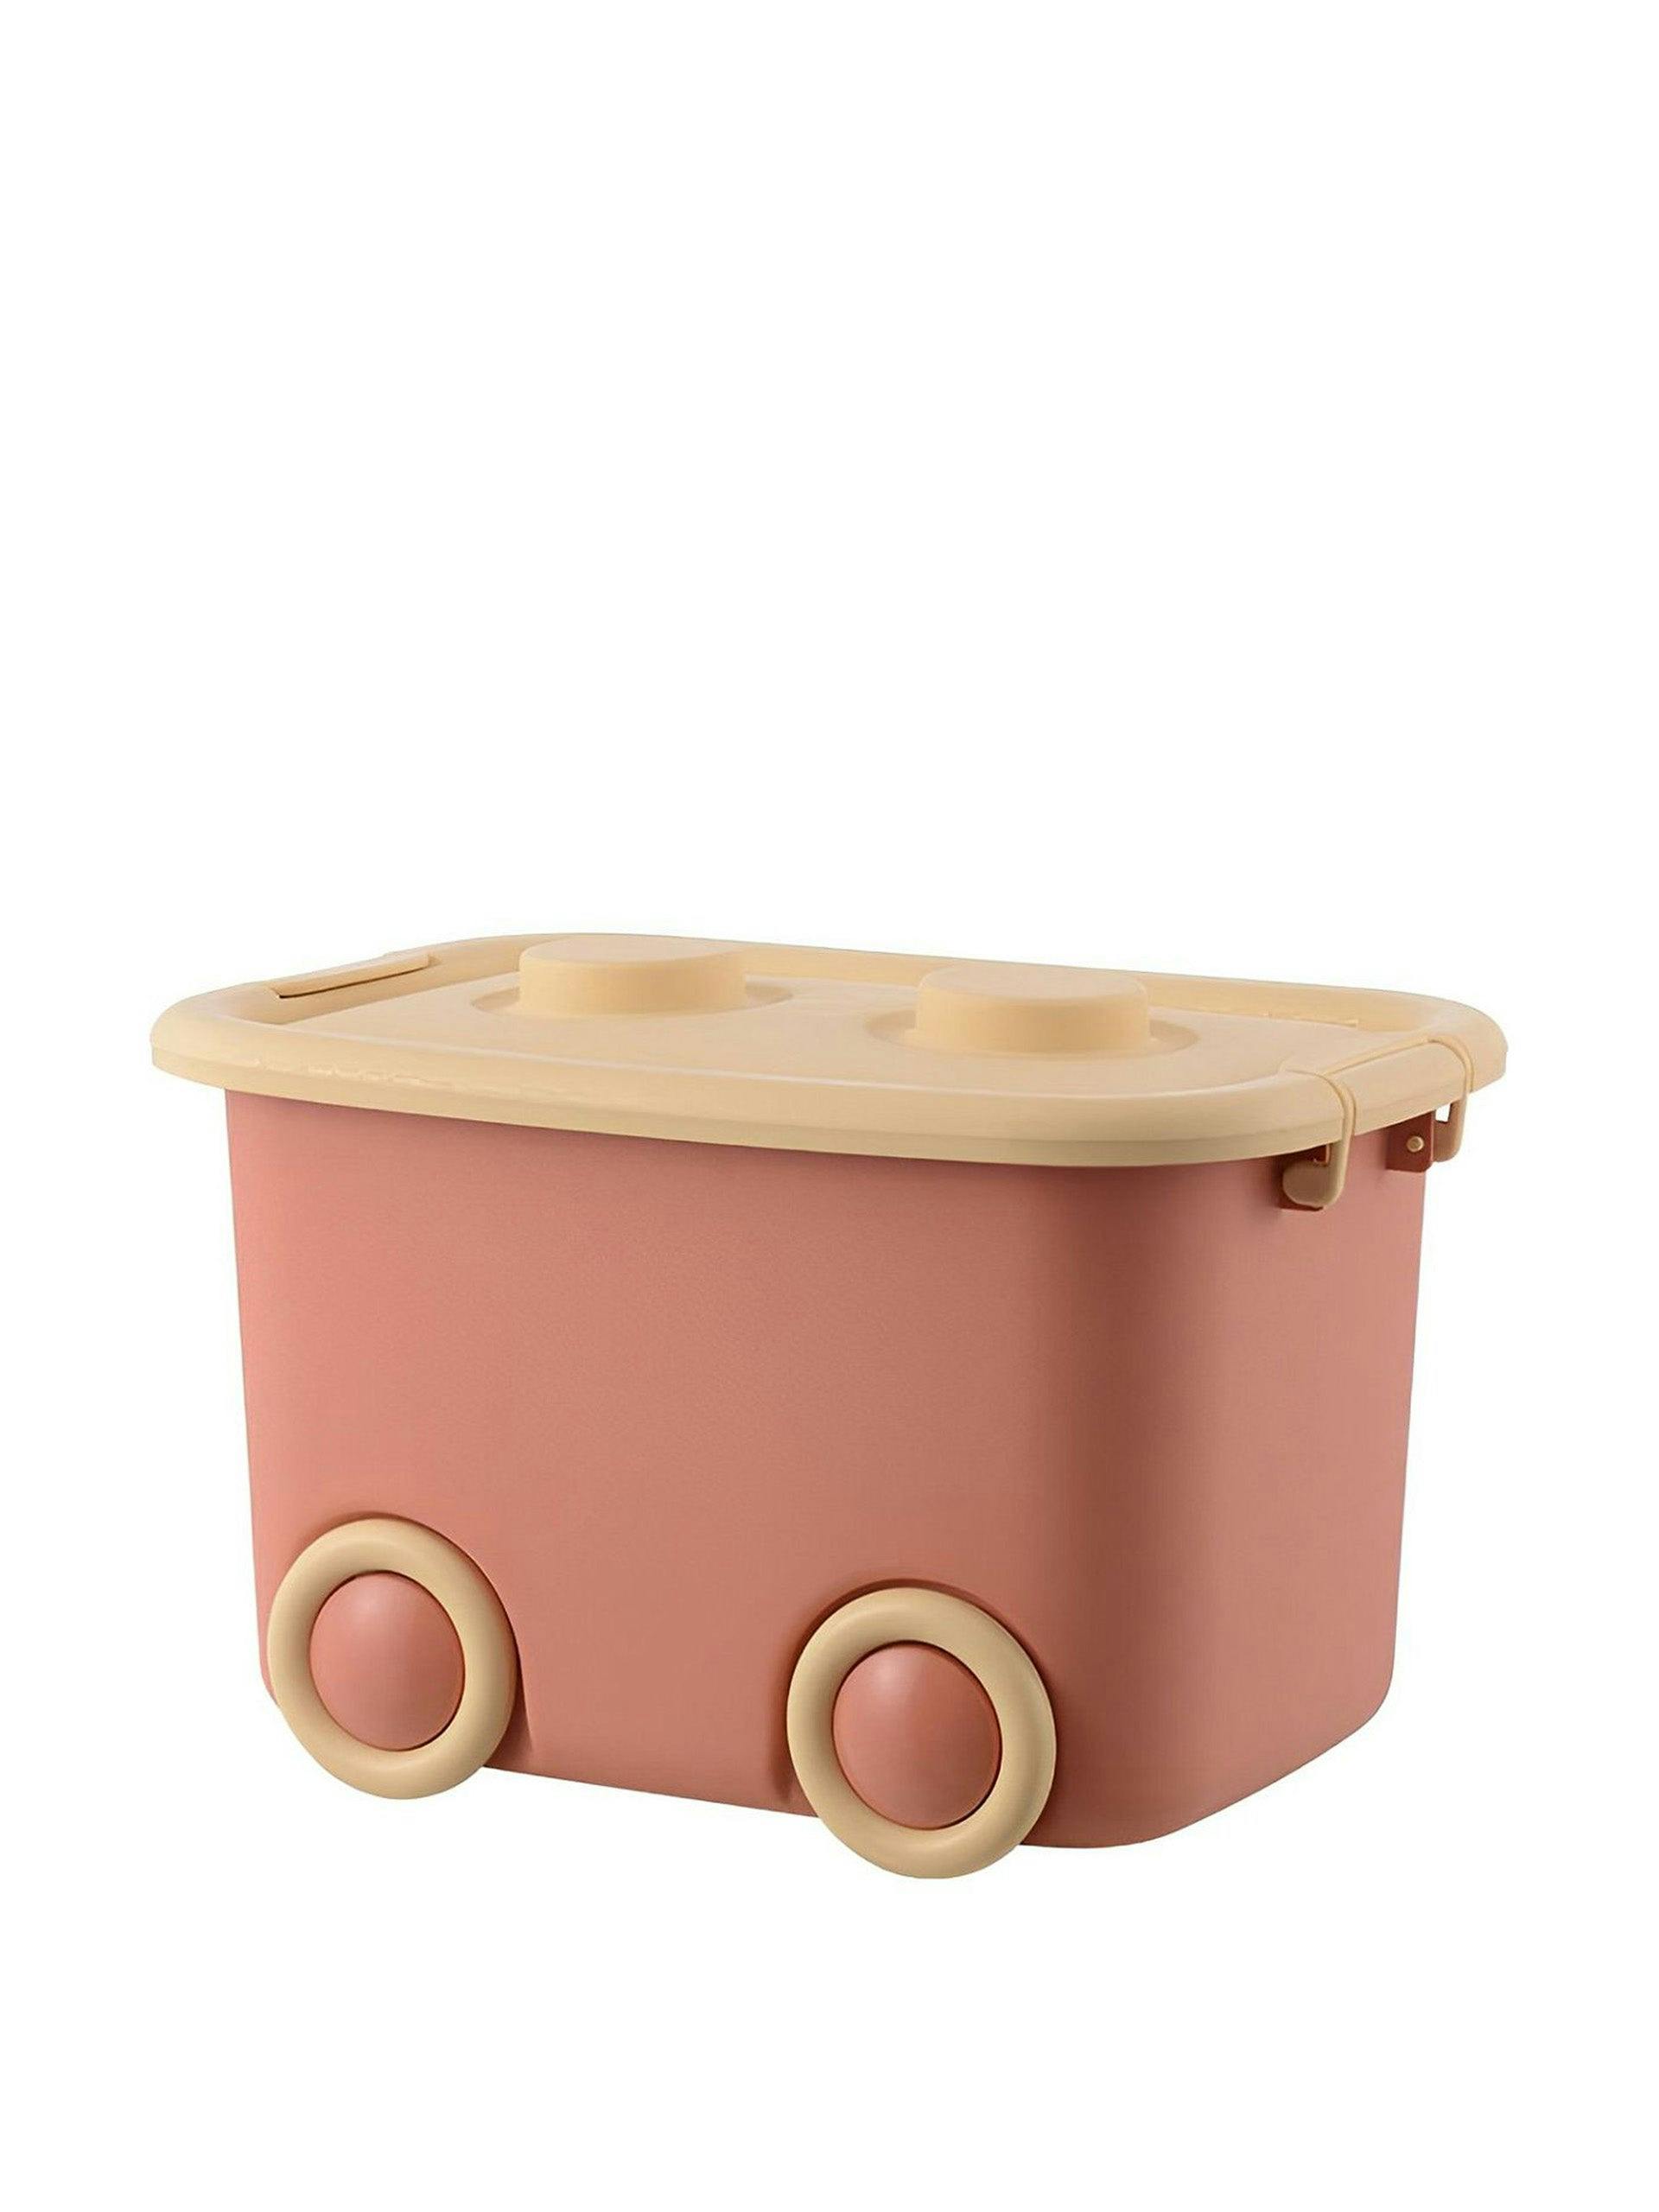 Toy storage box with lid